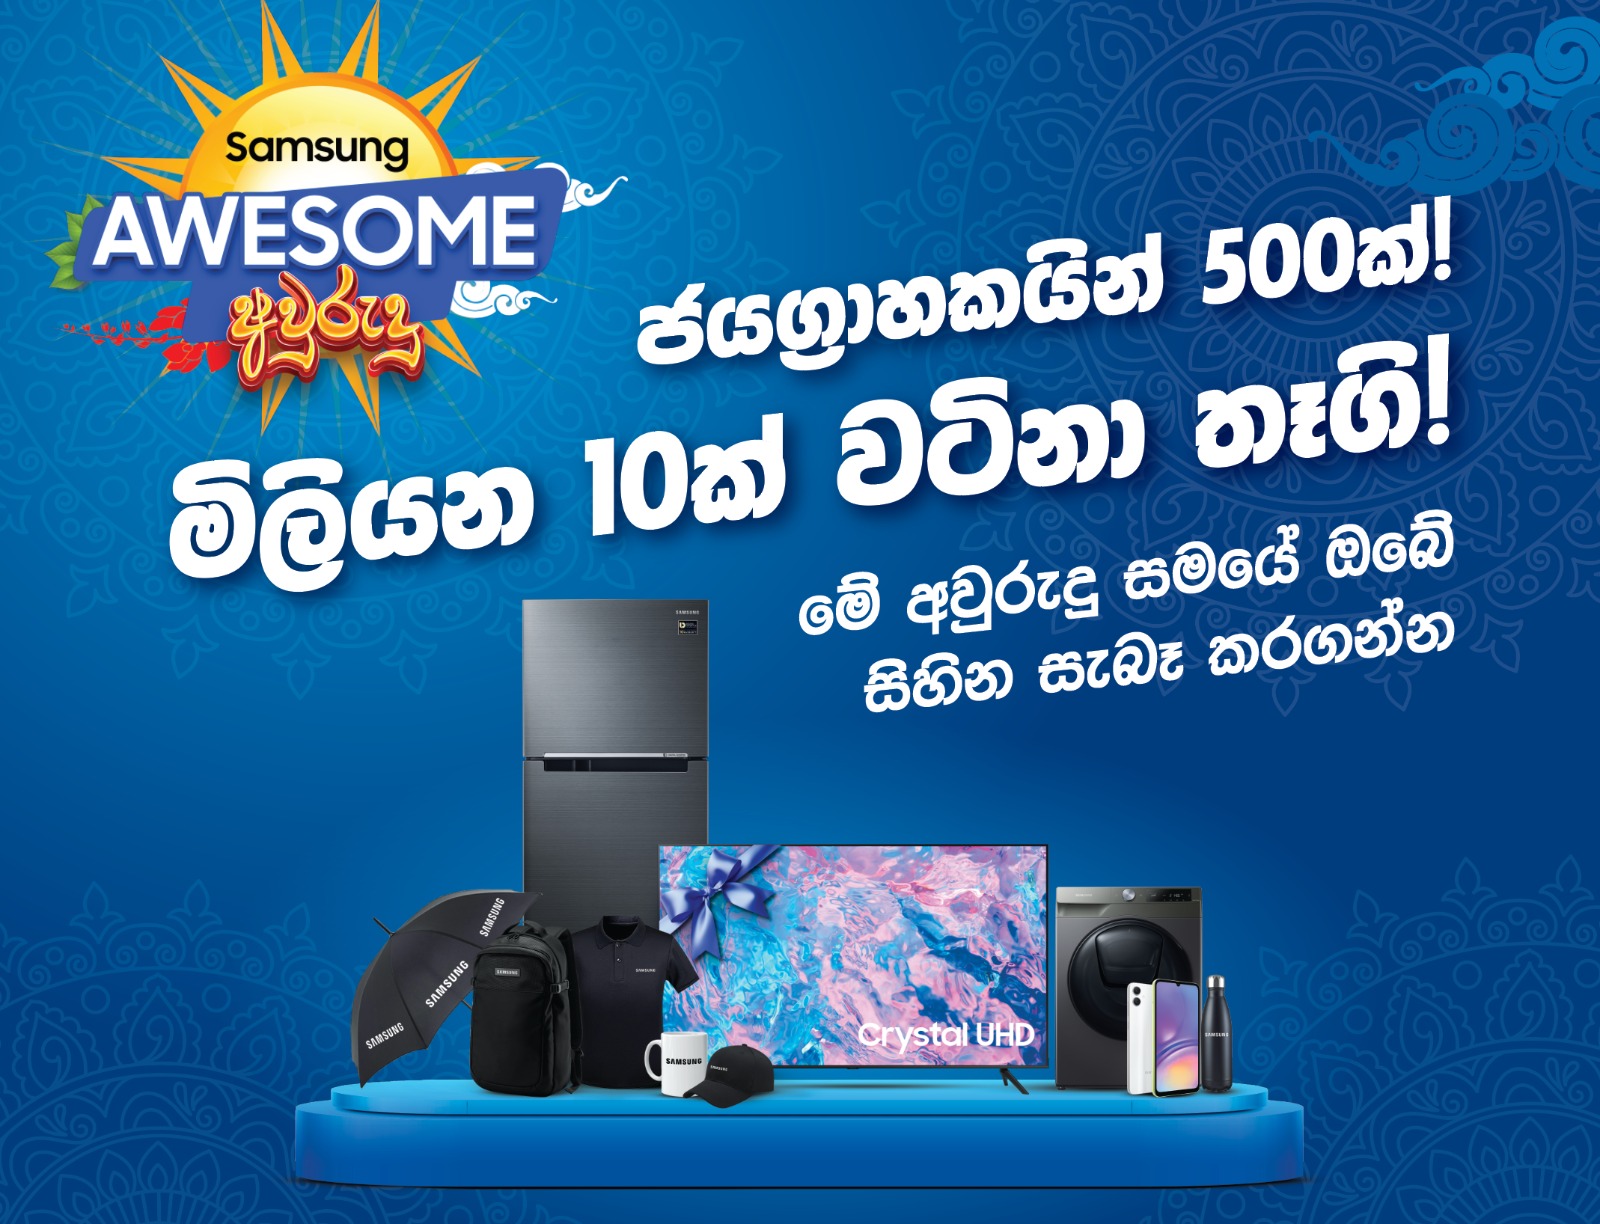 Celebrate the New Year with Samsung Sri Lanka’s “Awesome Avurudu” Promotion